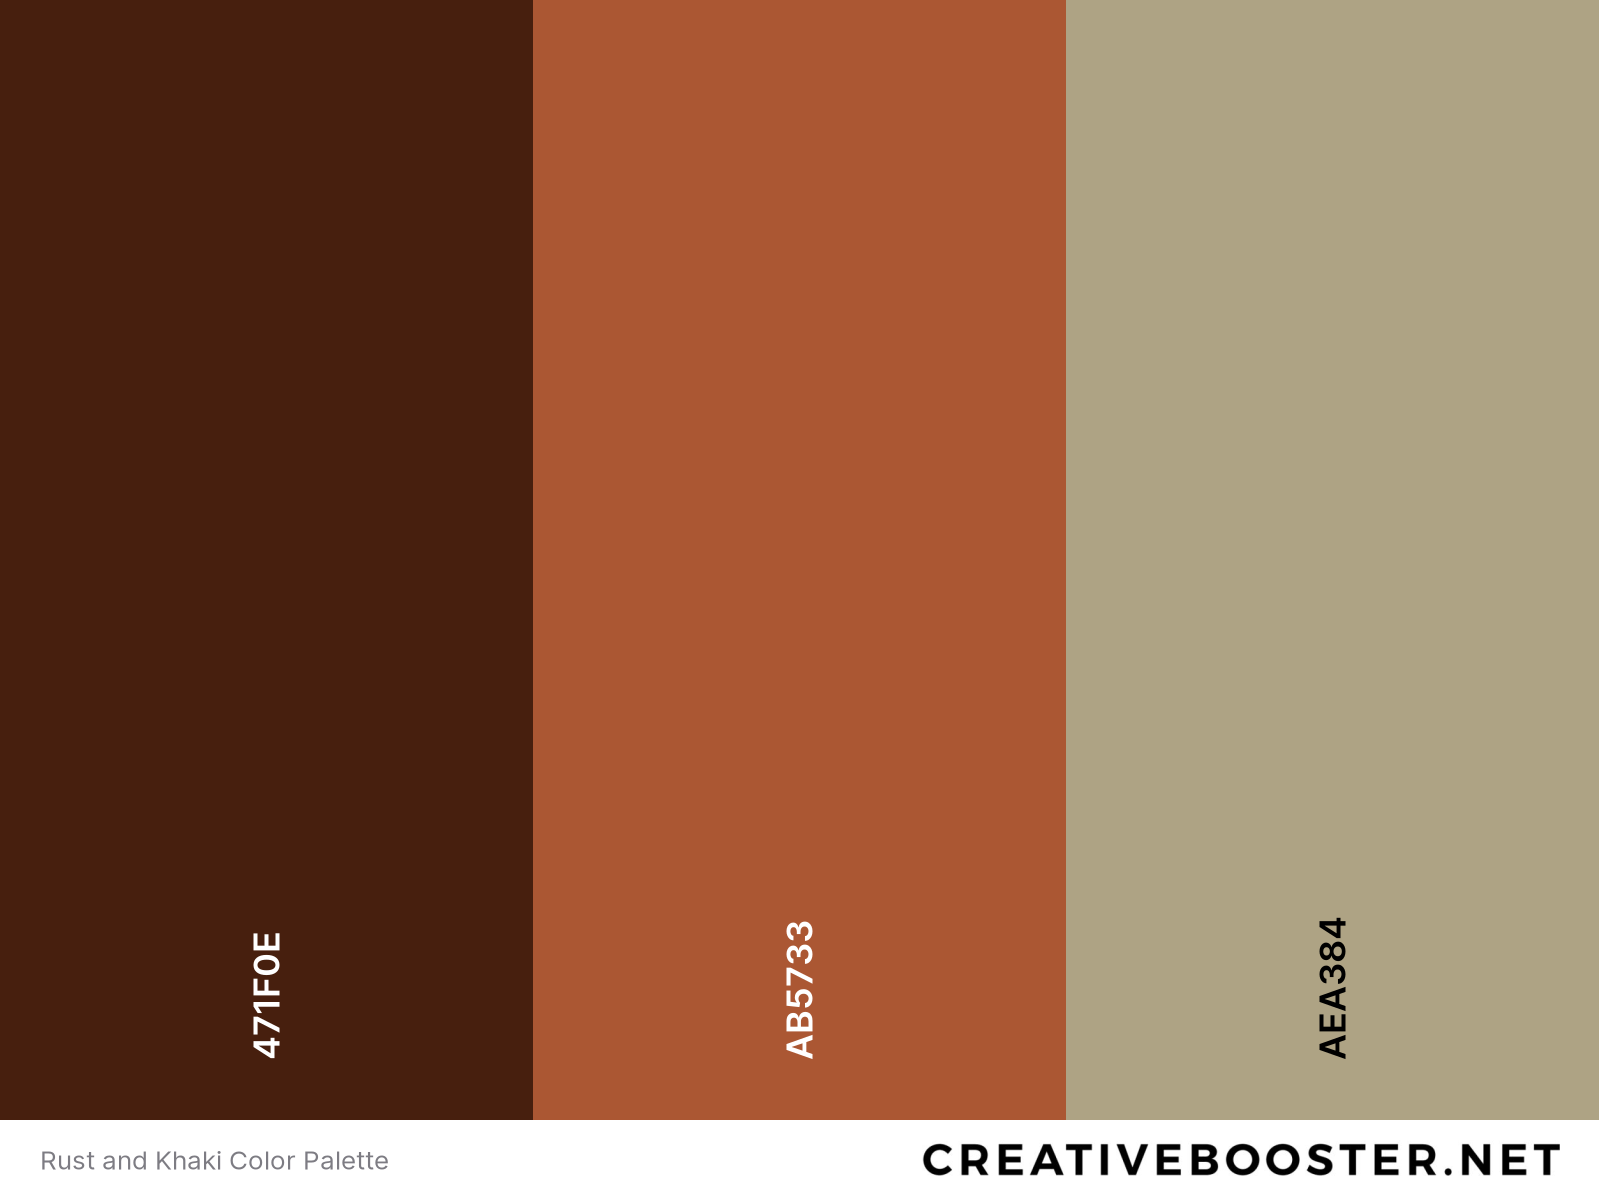 Rust and Khaki Color Palette